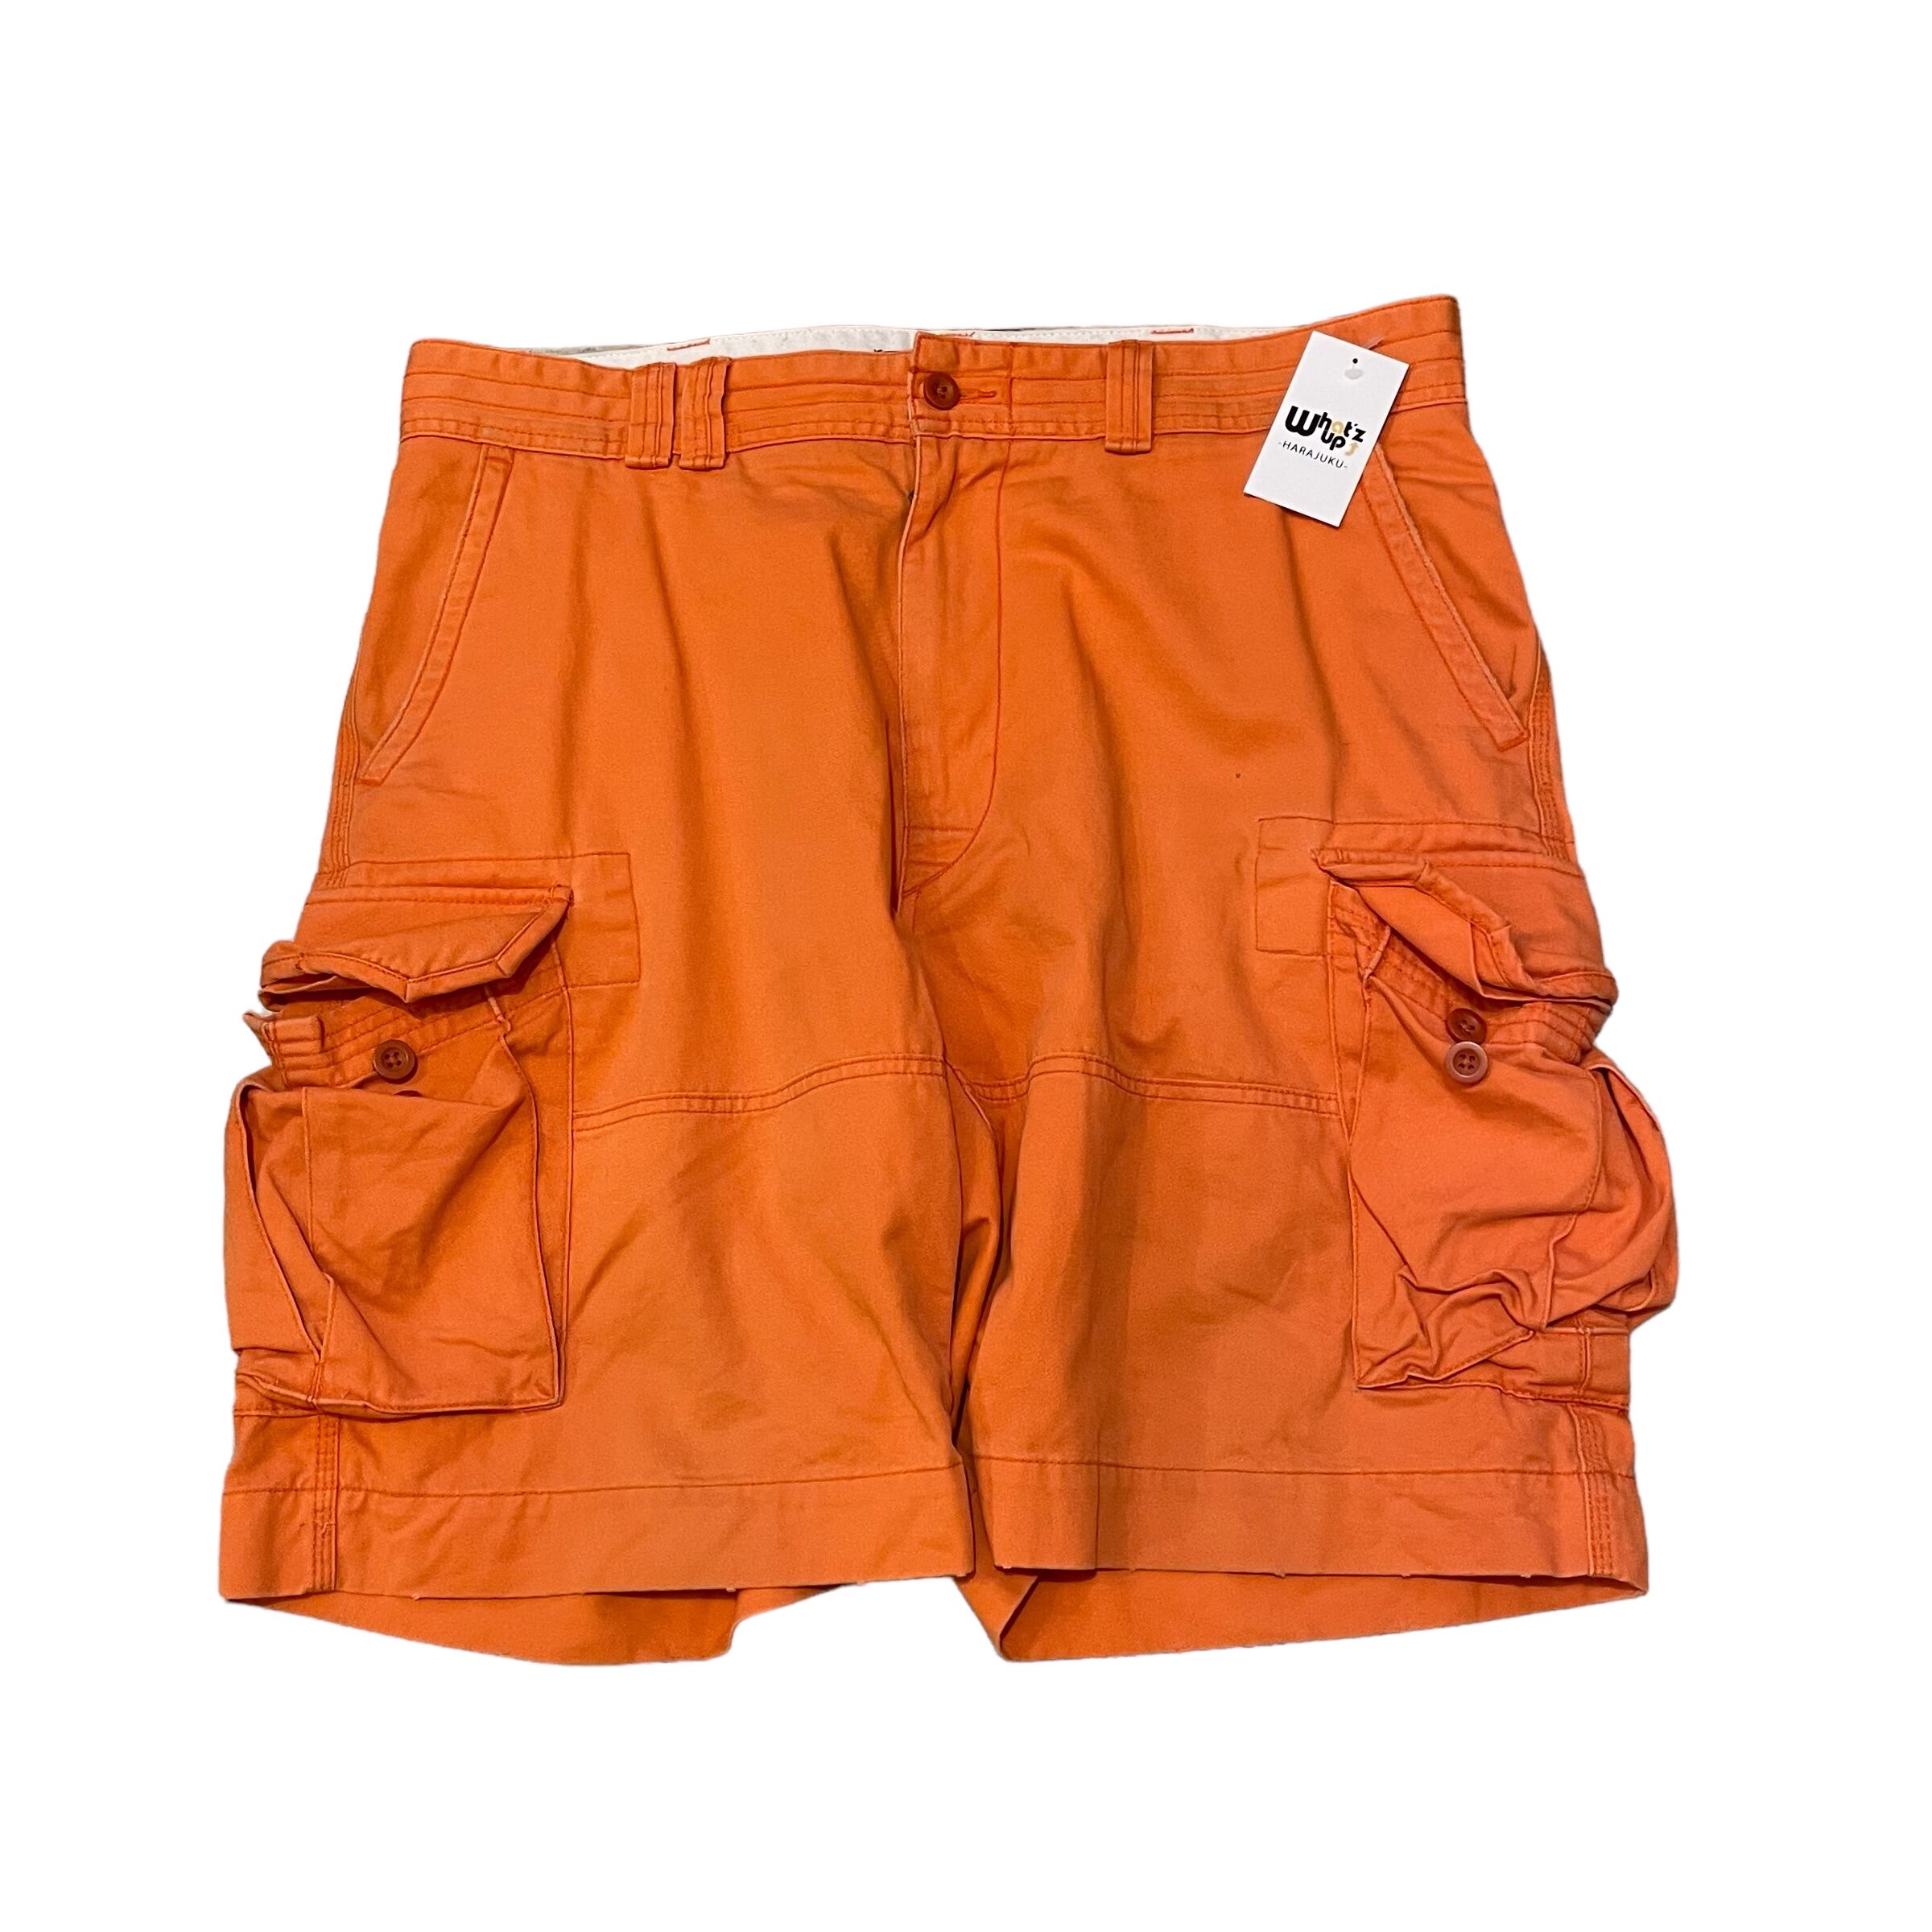 90s POLO Ralph Lauren cargo shorts | What'z up